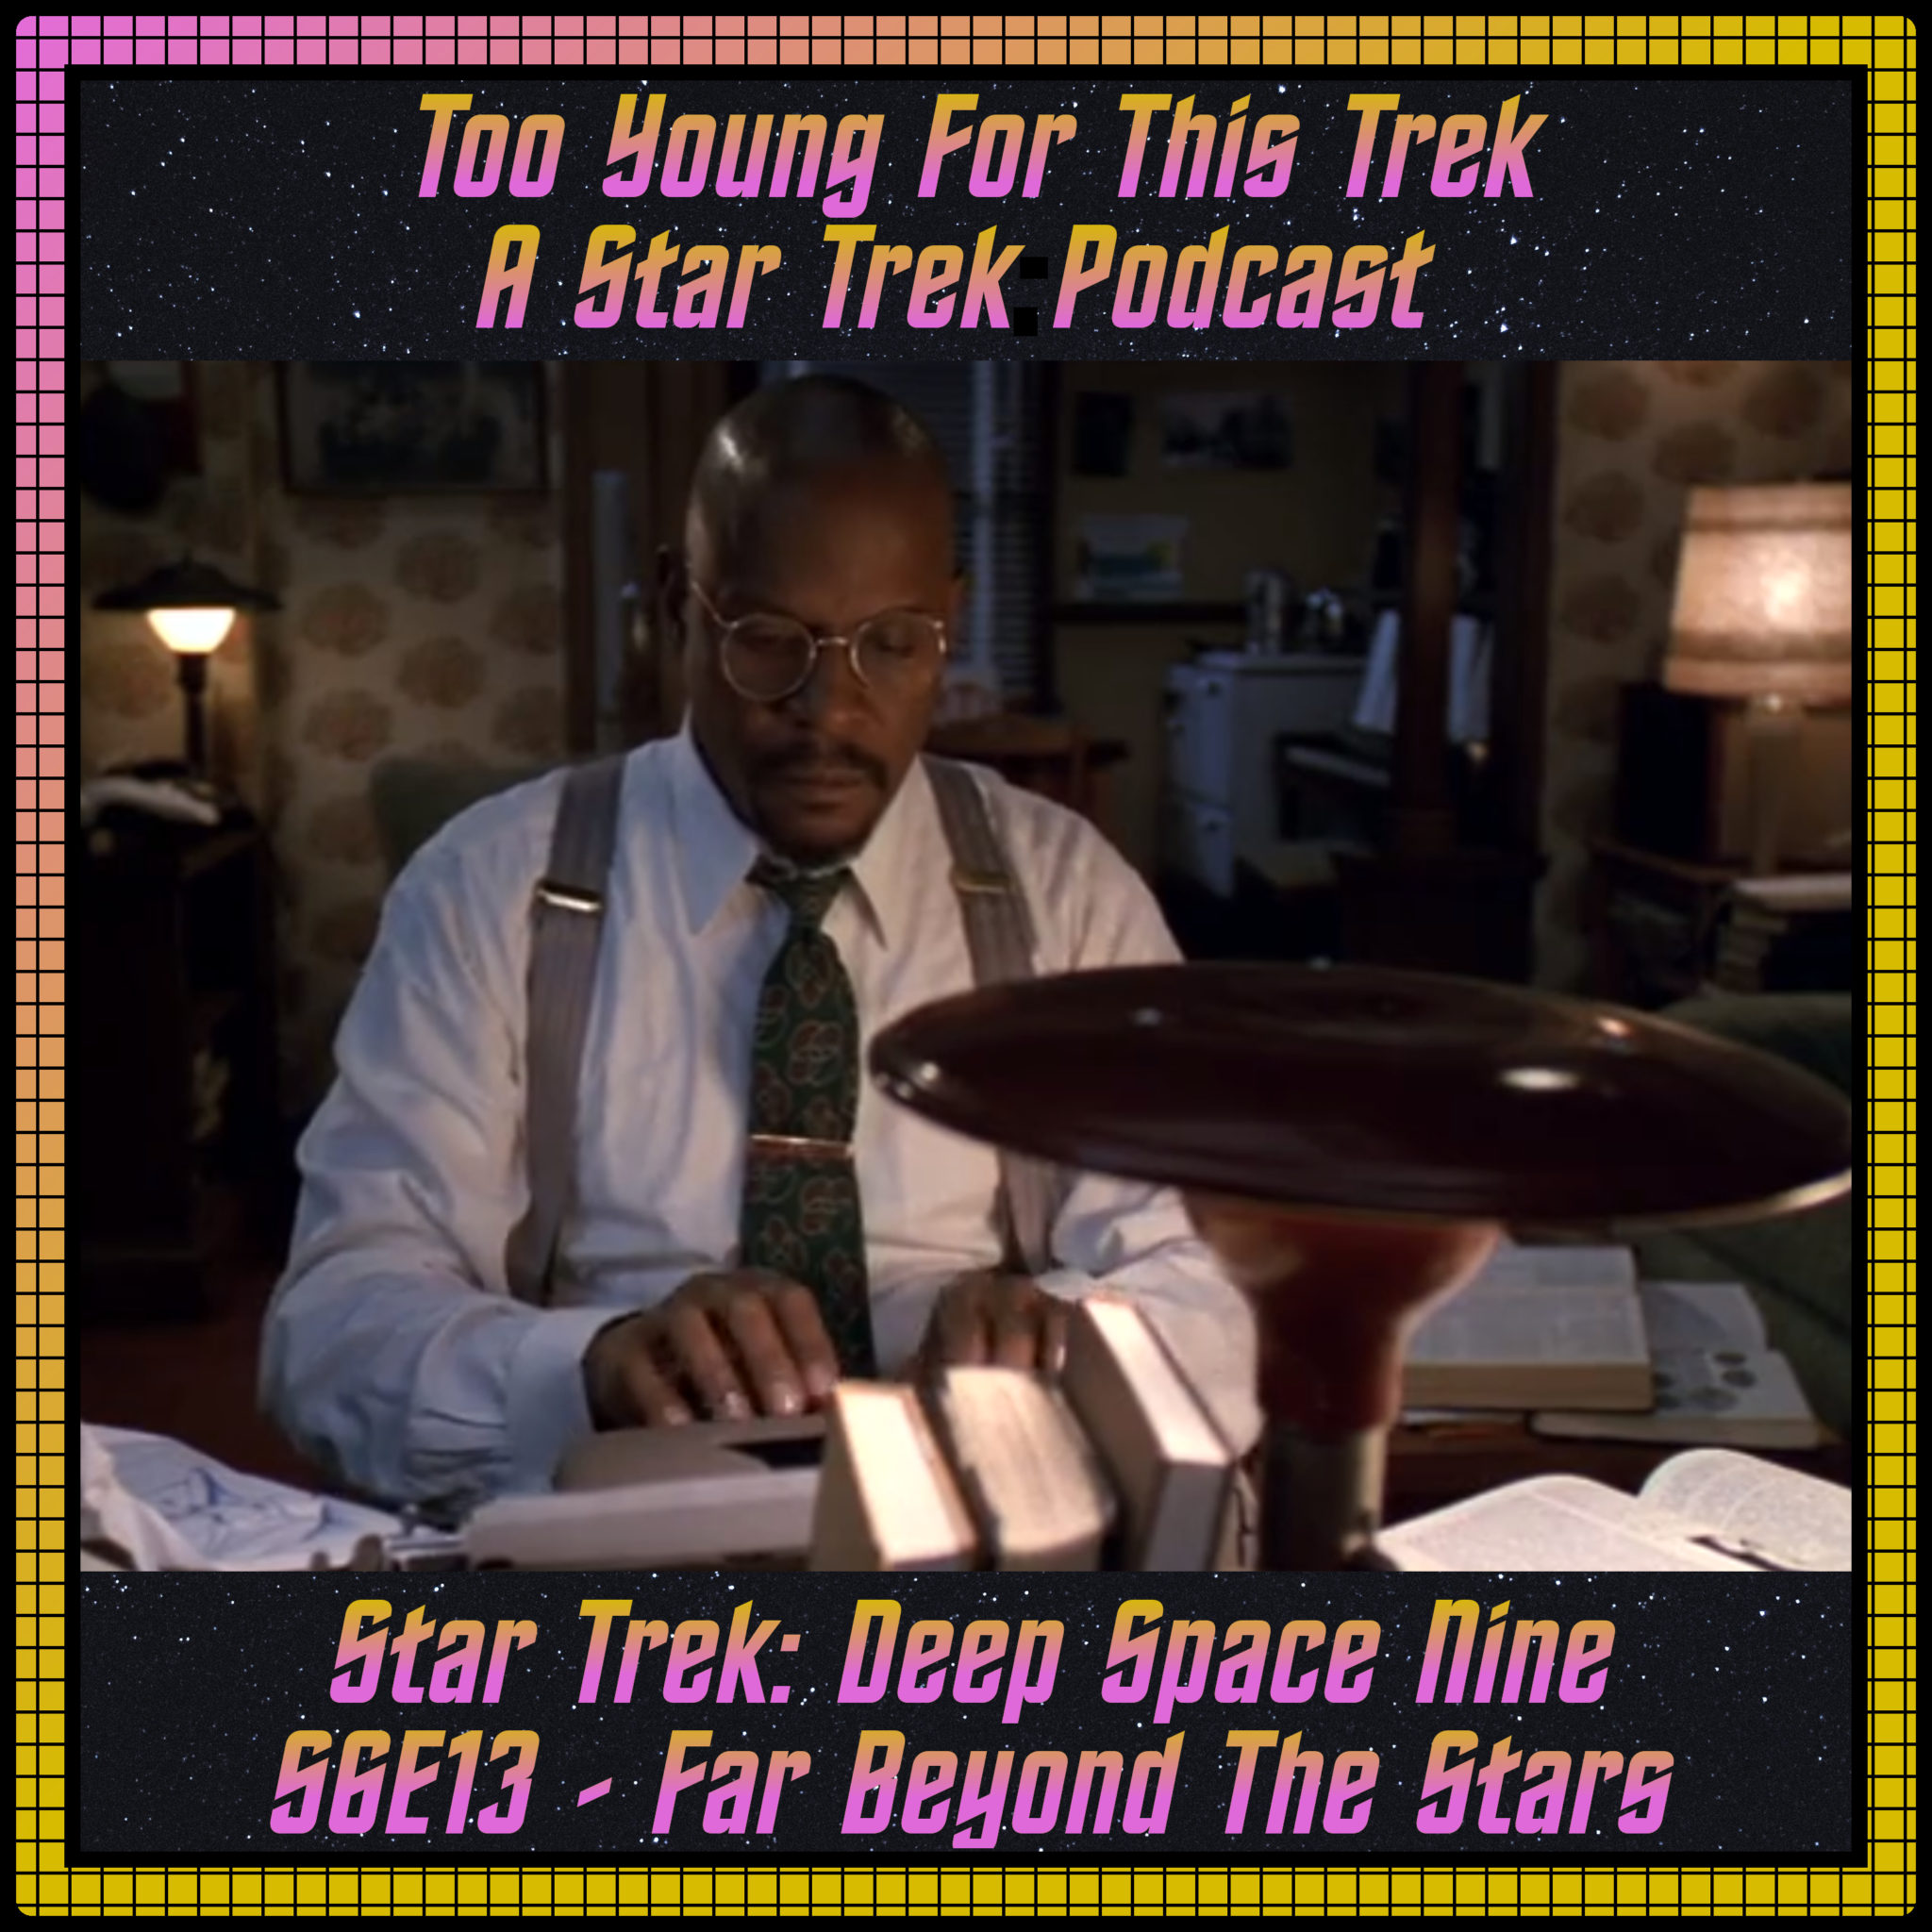 Star Trek: Deep Space Nine S6E13 - Far Beyond the Stars